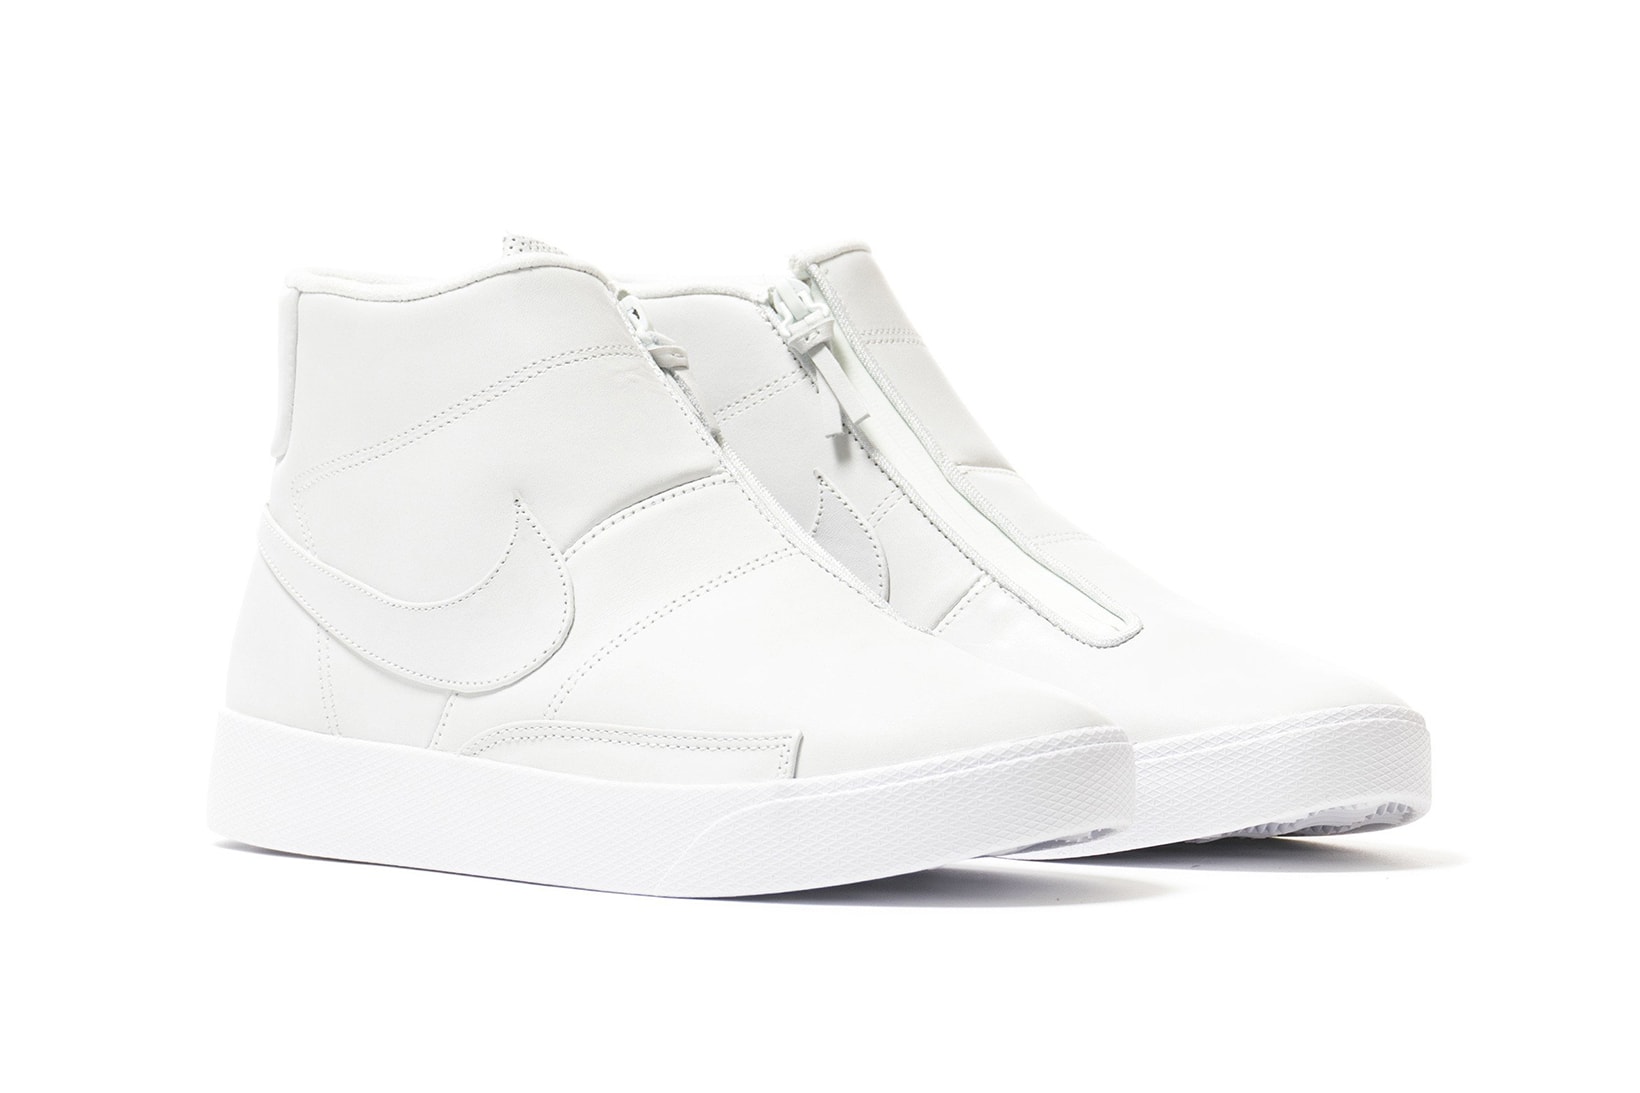 NikeLab Blazer Advanced in White Sneaker